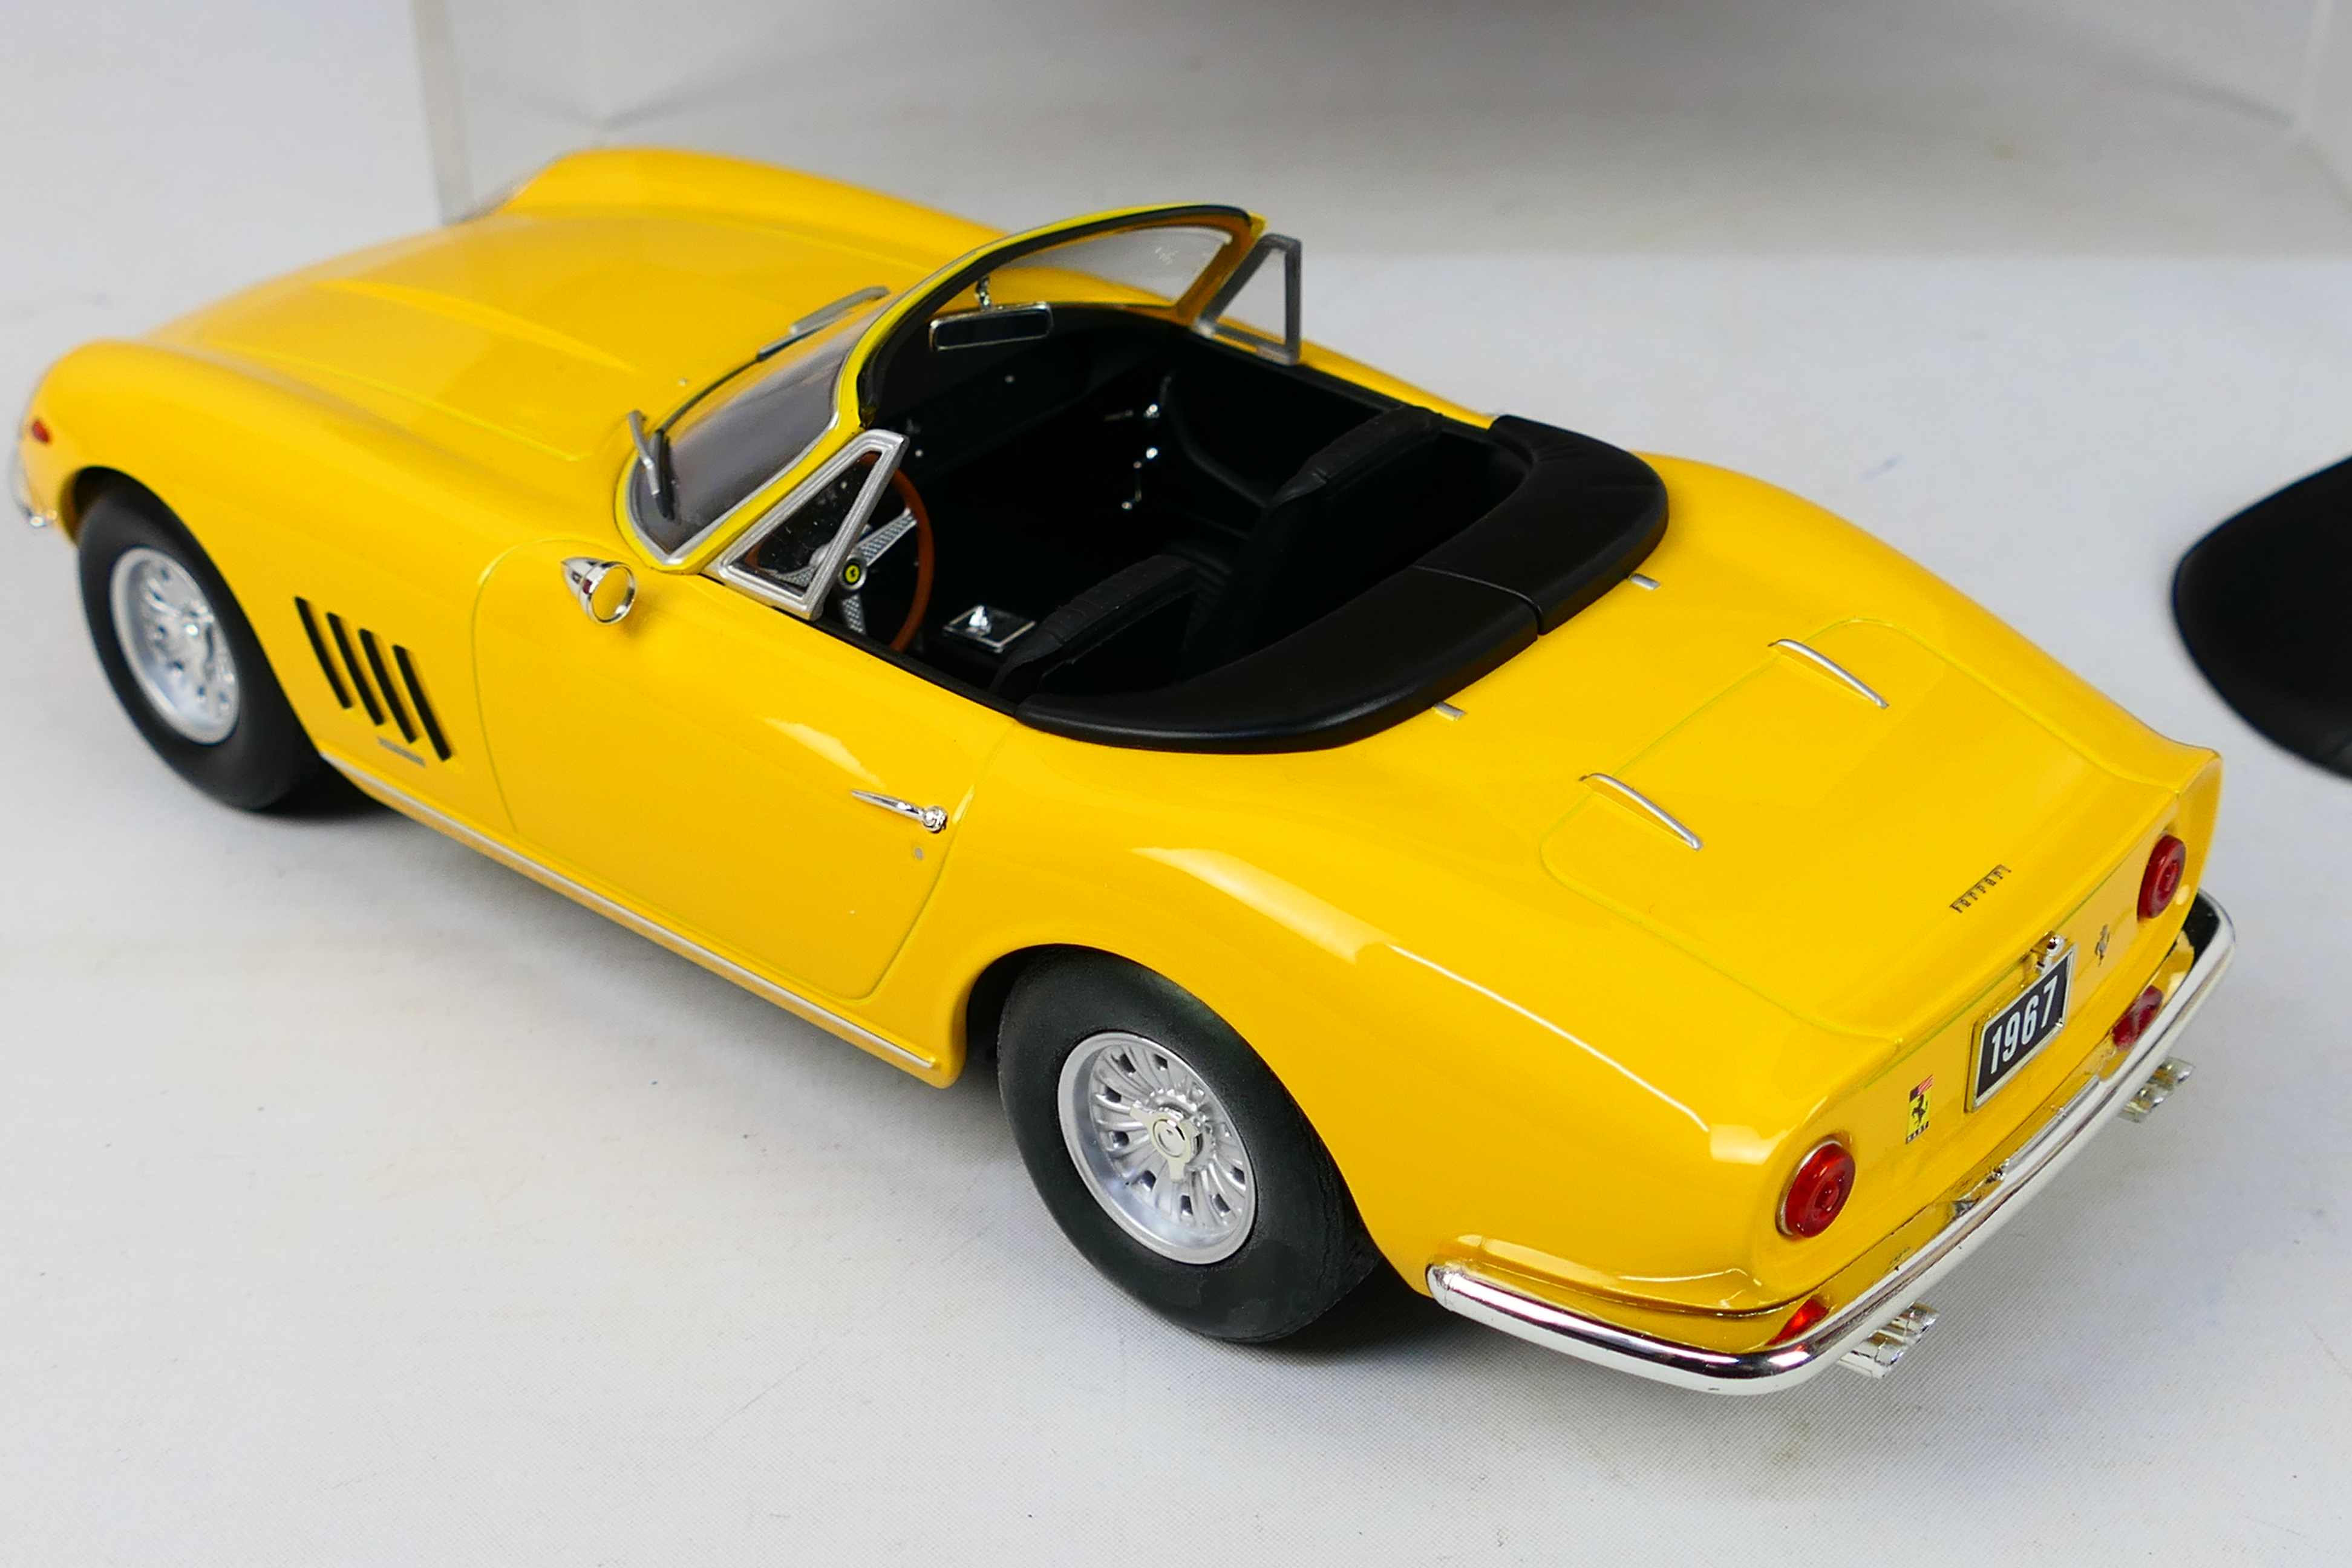 KK Scale - A boxed KK Scale Limited Edition #KKDC180232 1:18 scale Ferrari 275 /4 NART Spyder 1967. - Image 4 of 8